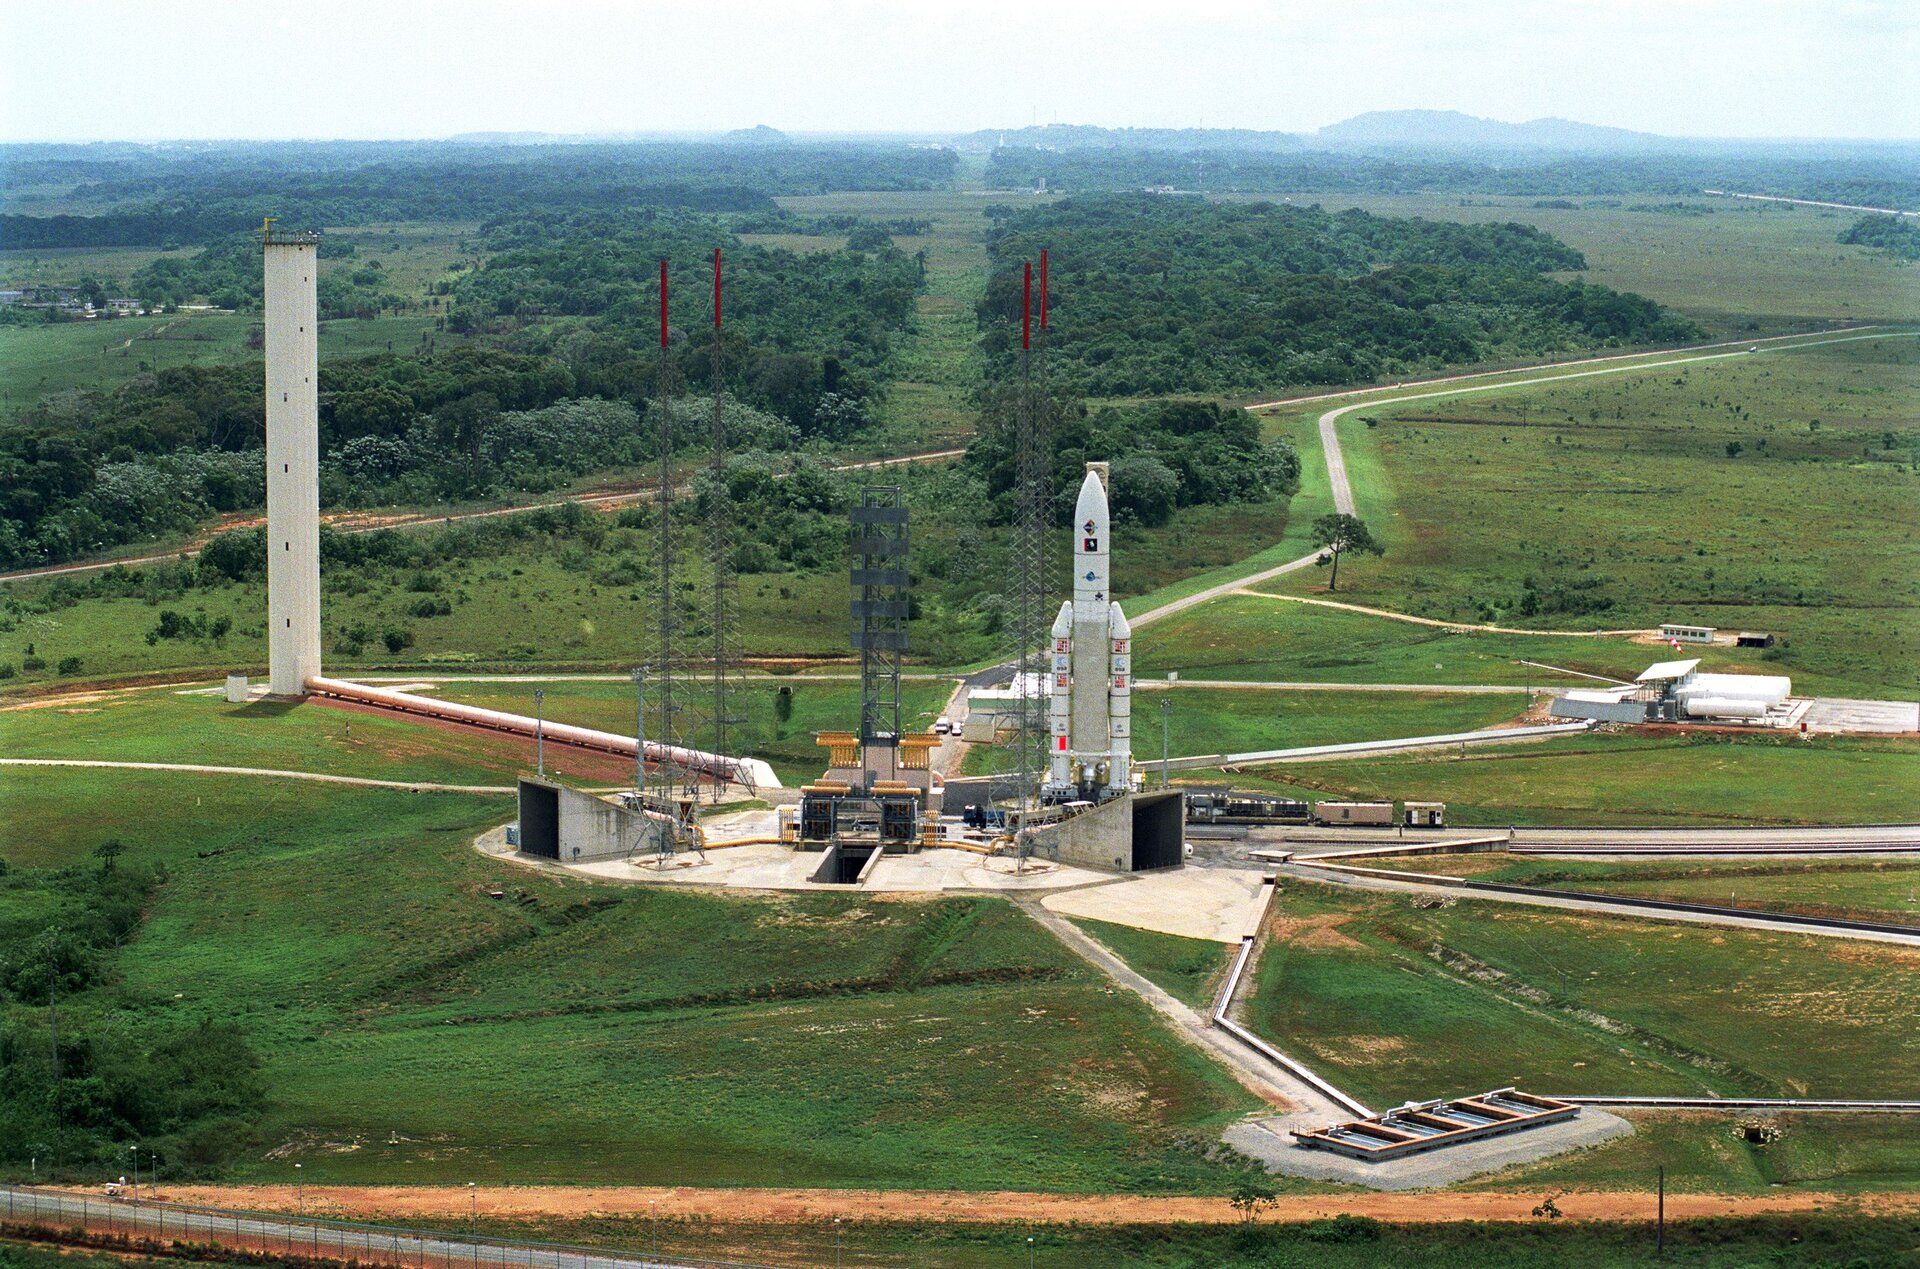 Ariane 5 launch pad at Kourou